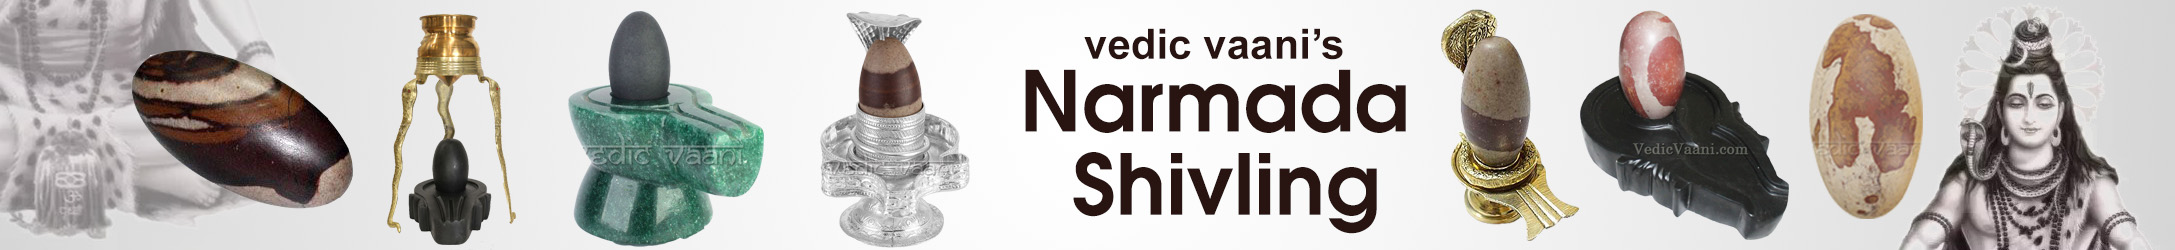 Narmada Shivling